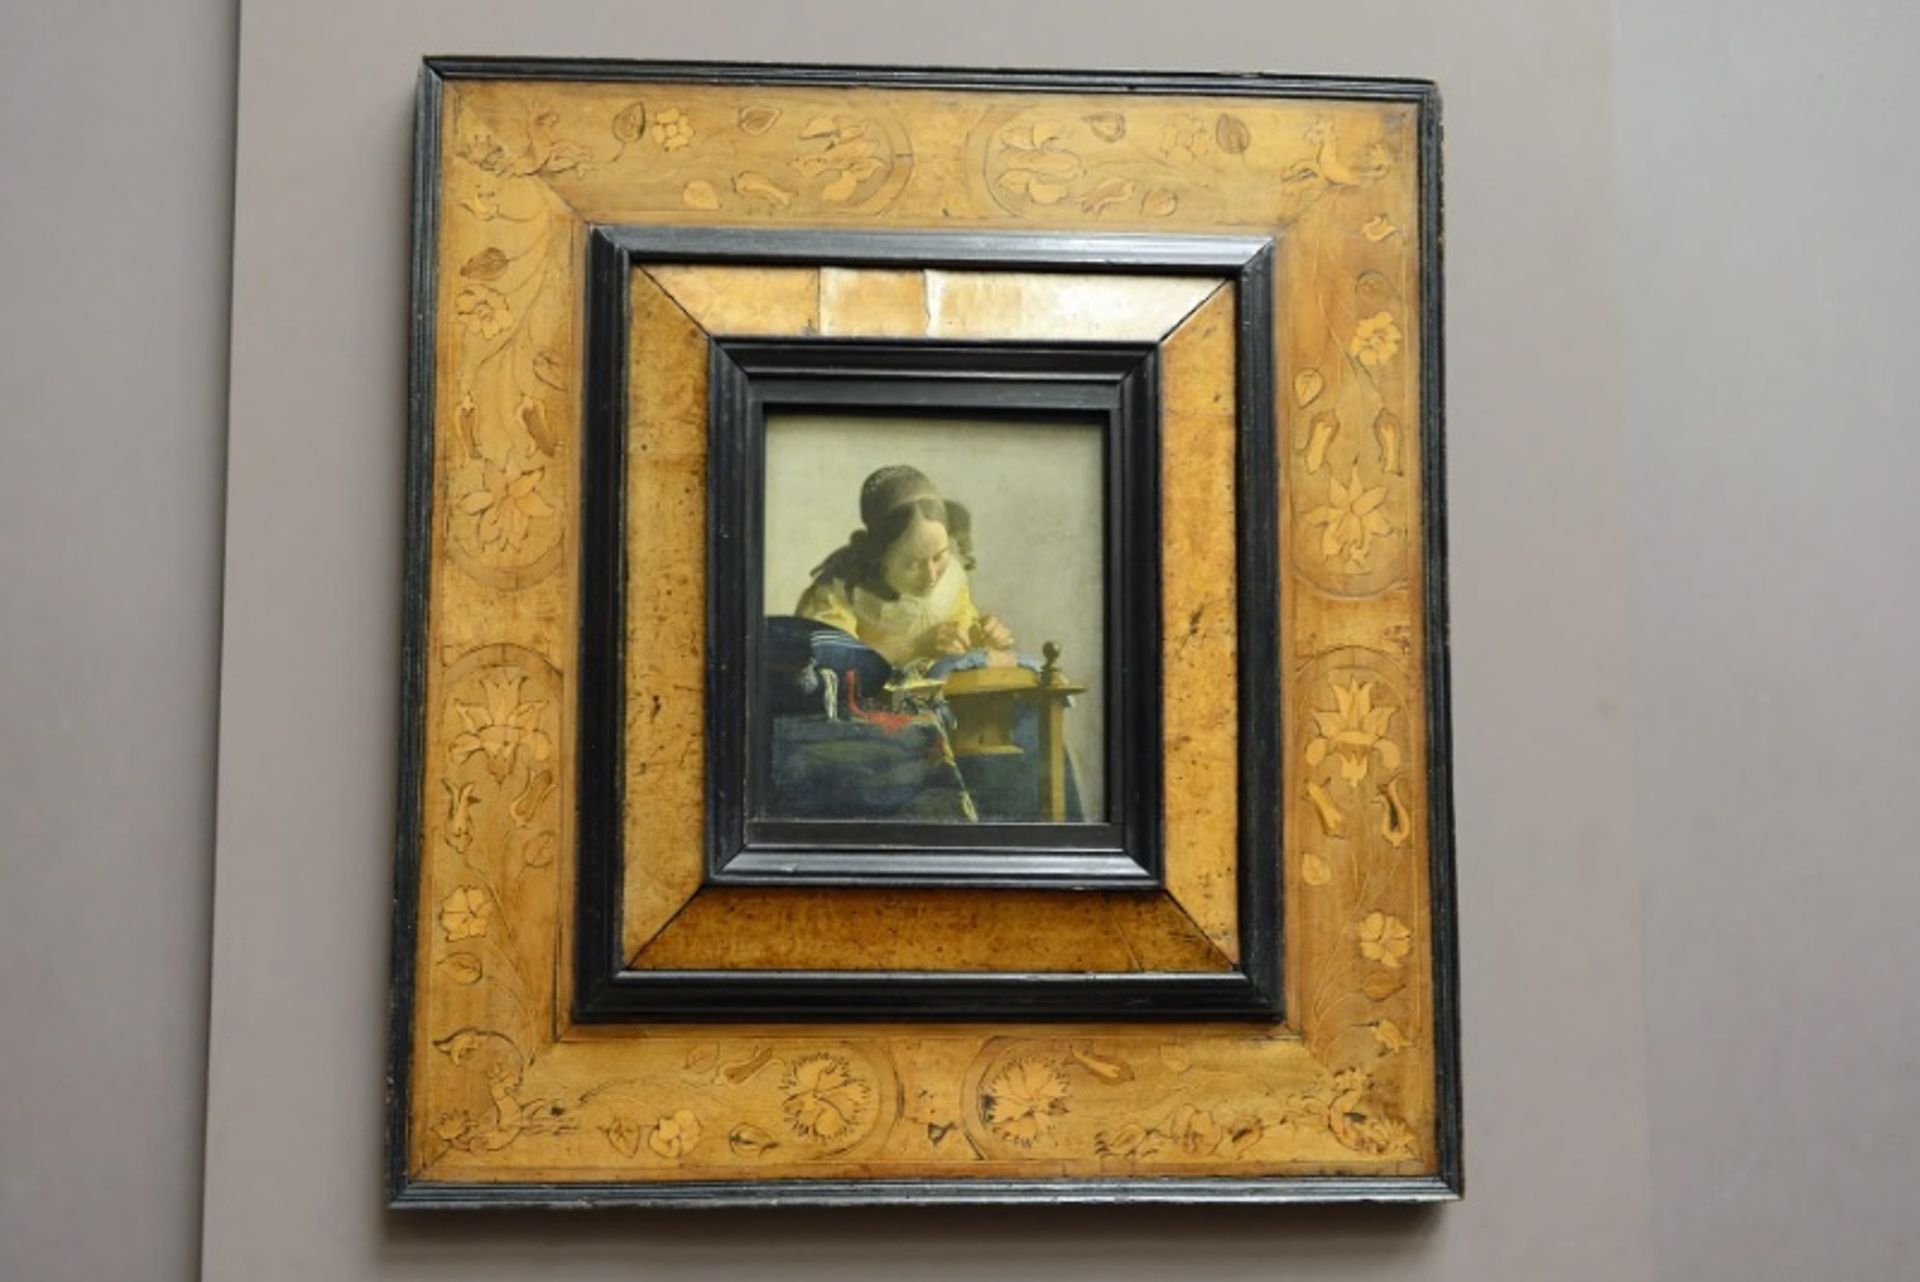 The Lacemaker של יוהנס ורמיר (1666-68) במוזיאון ה"לובר" בפריז

צילום: הבן של גרוצ'ו